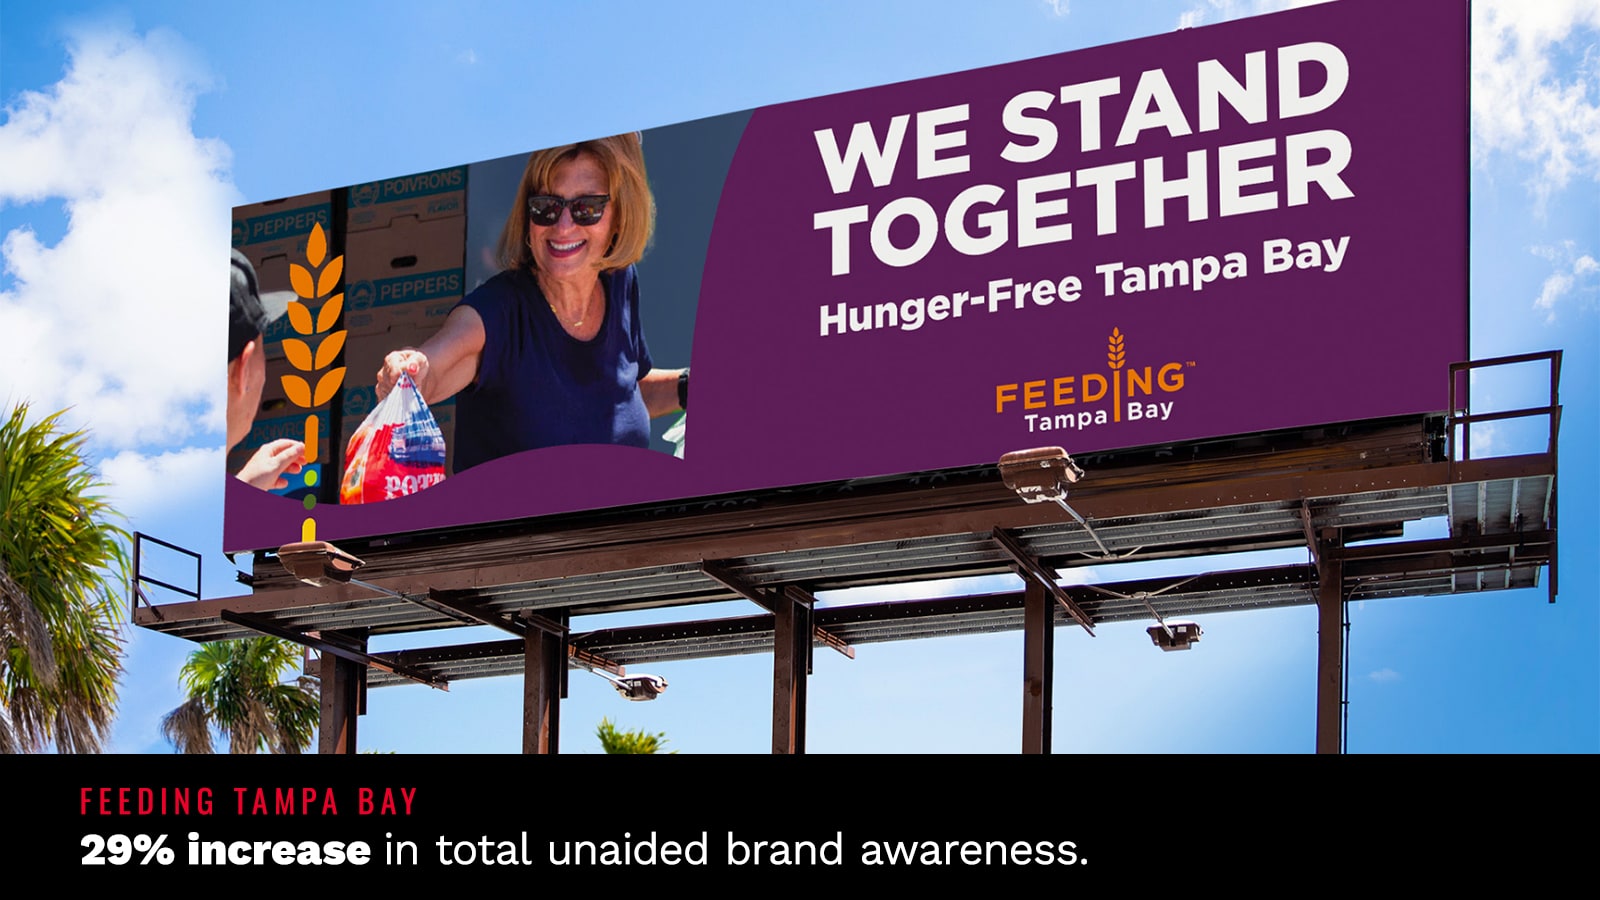 Feeding Tampa Bay: 29% increase in total unaided brand awareness.